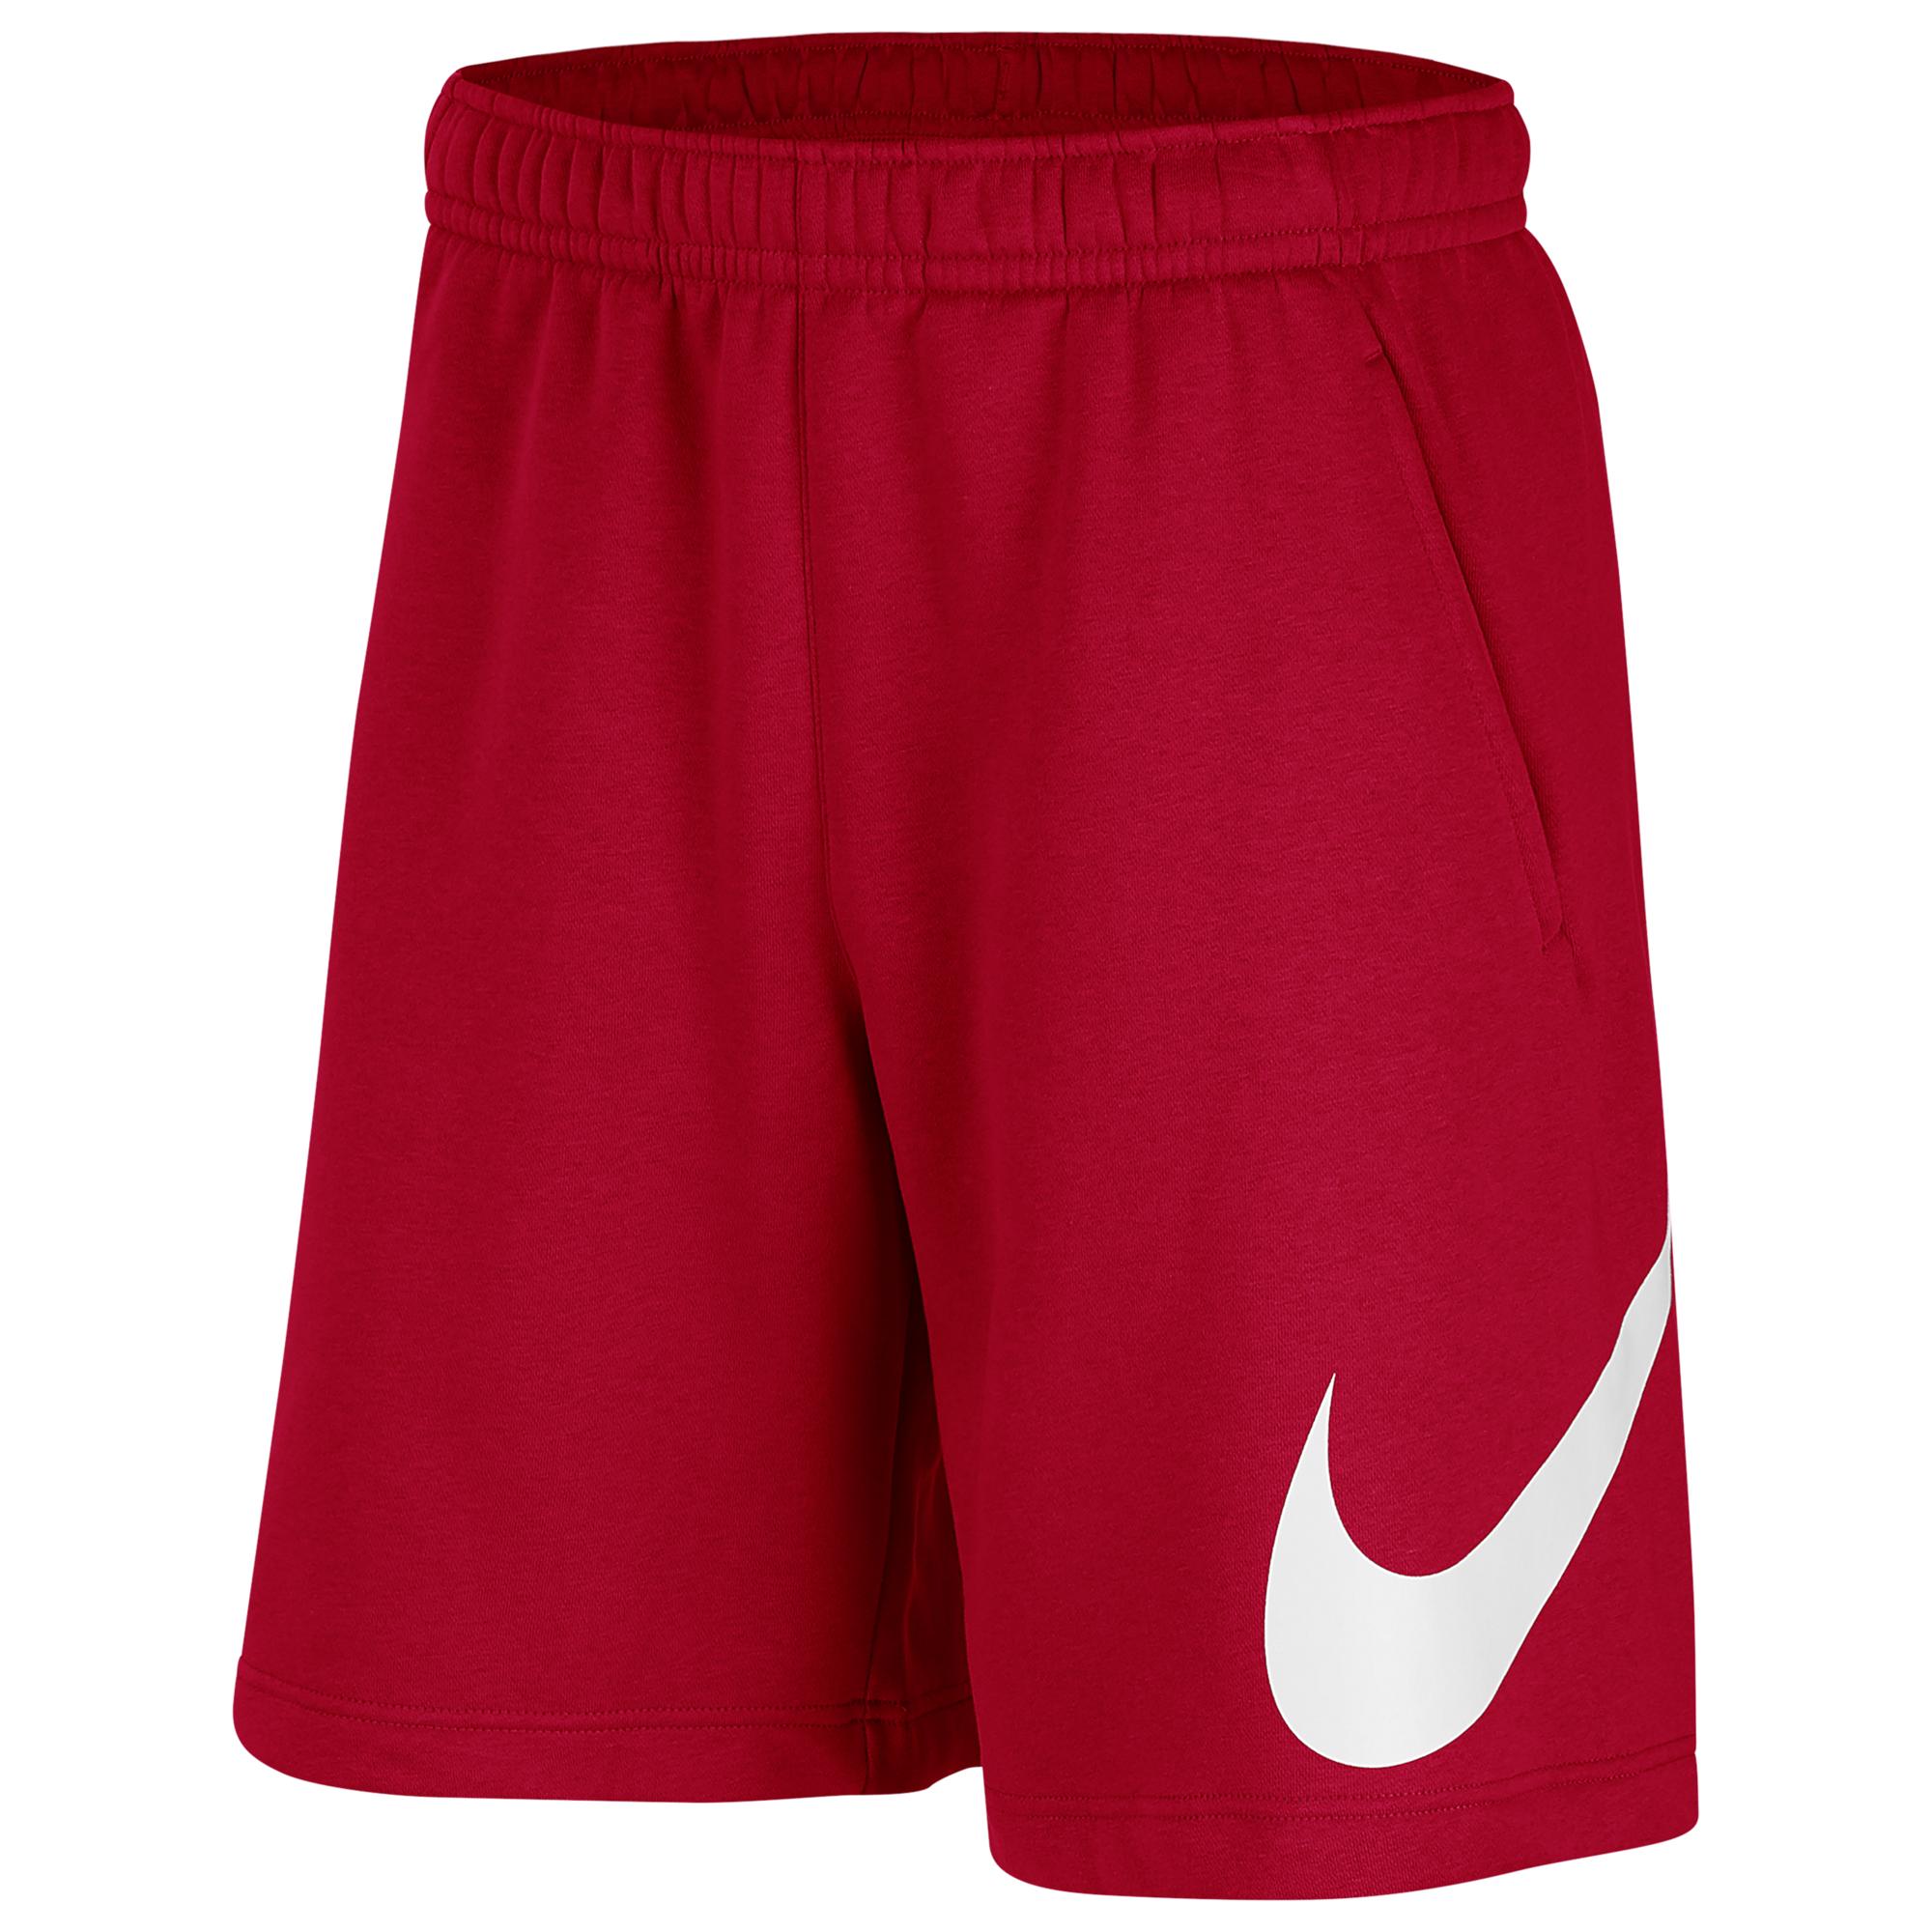 Nike Fleece Gx Club Shorts in University Red/White (Red) for Men - Lyst